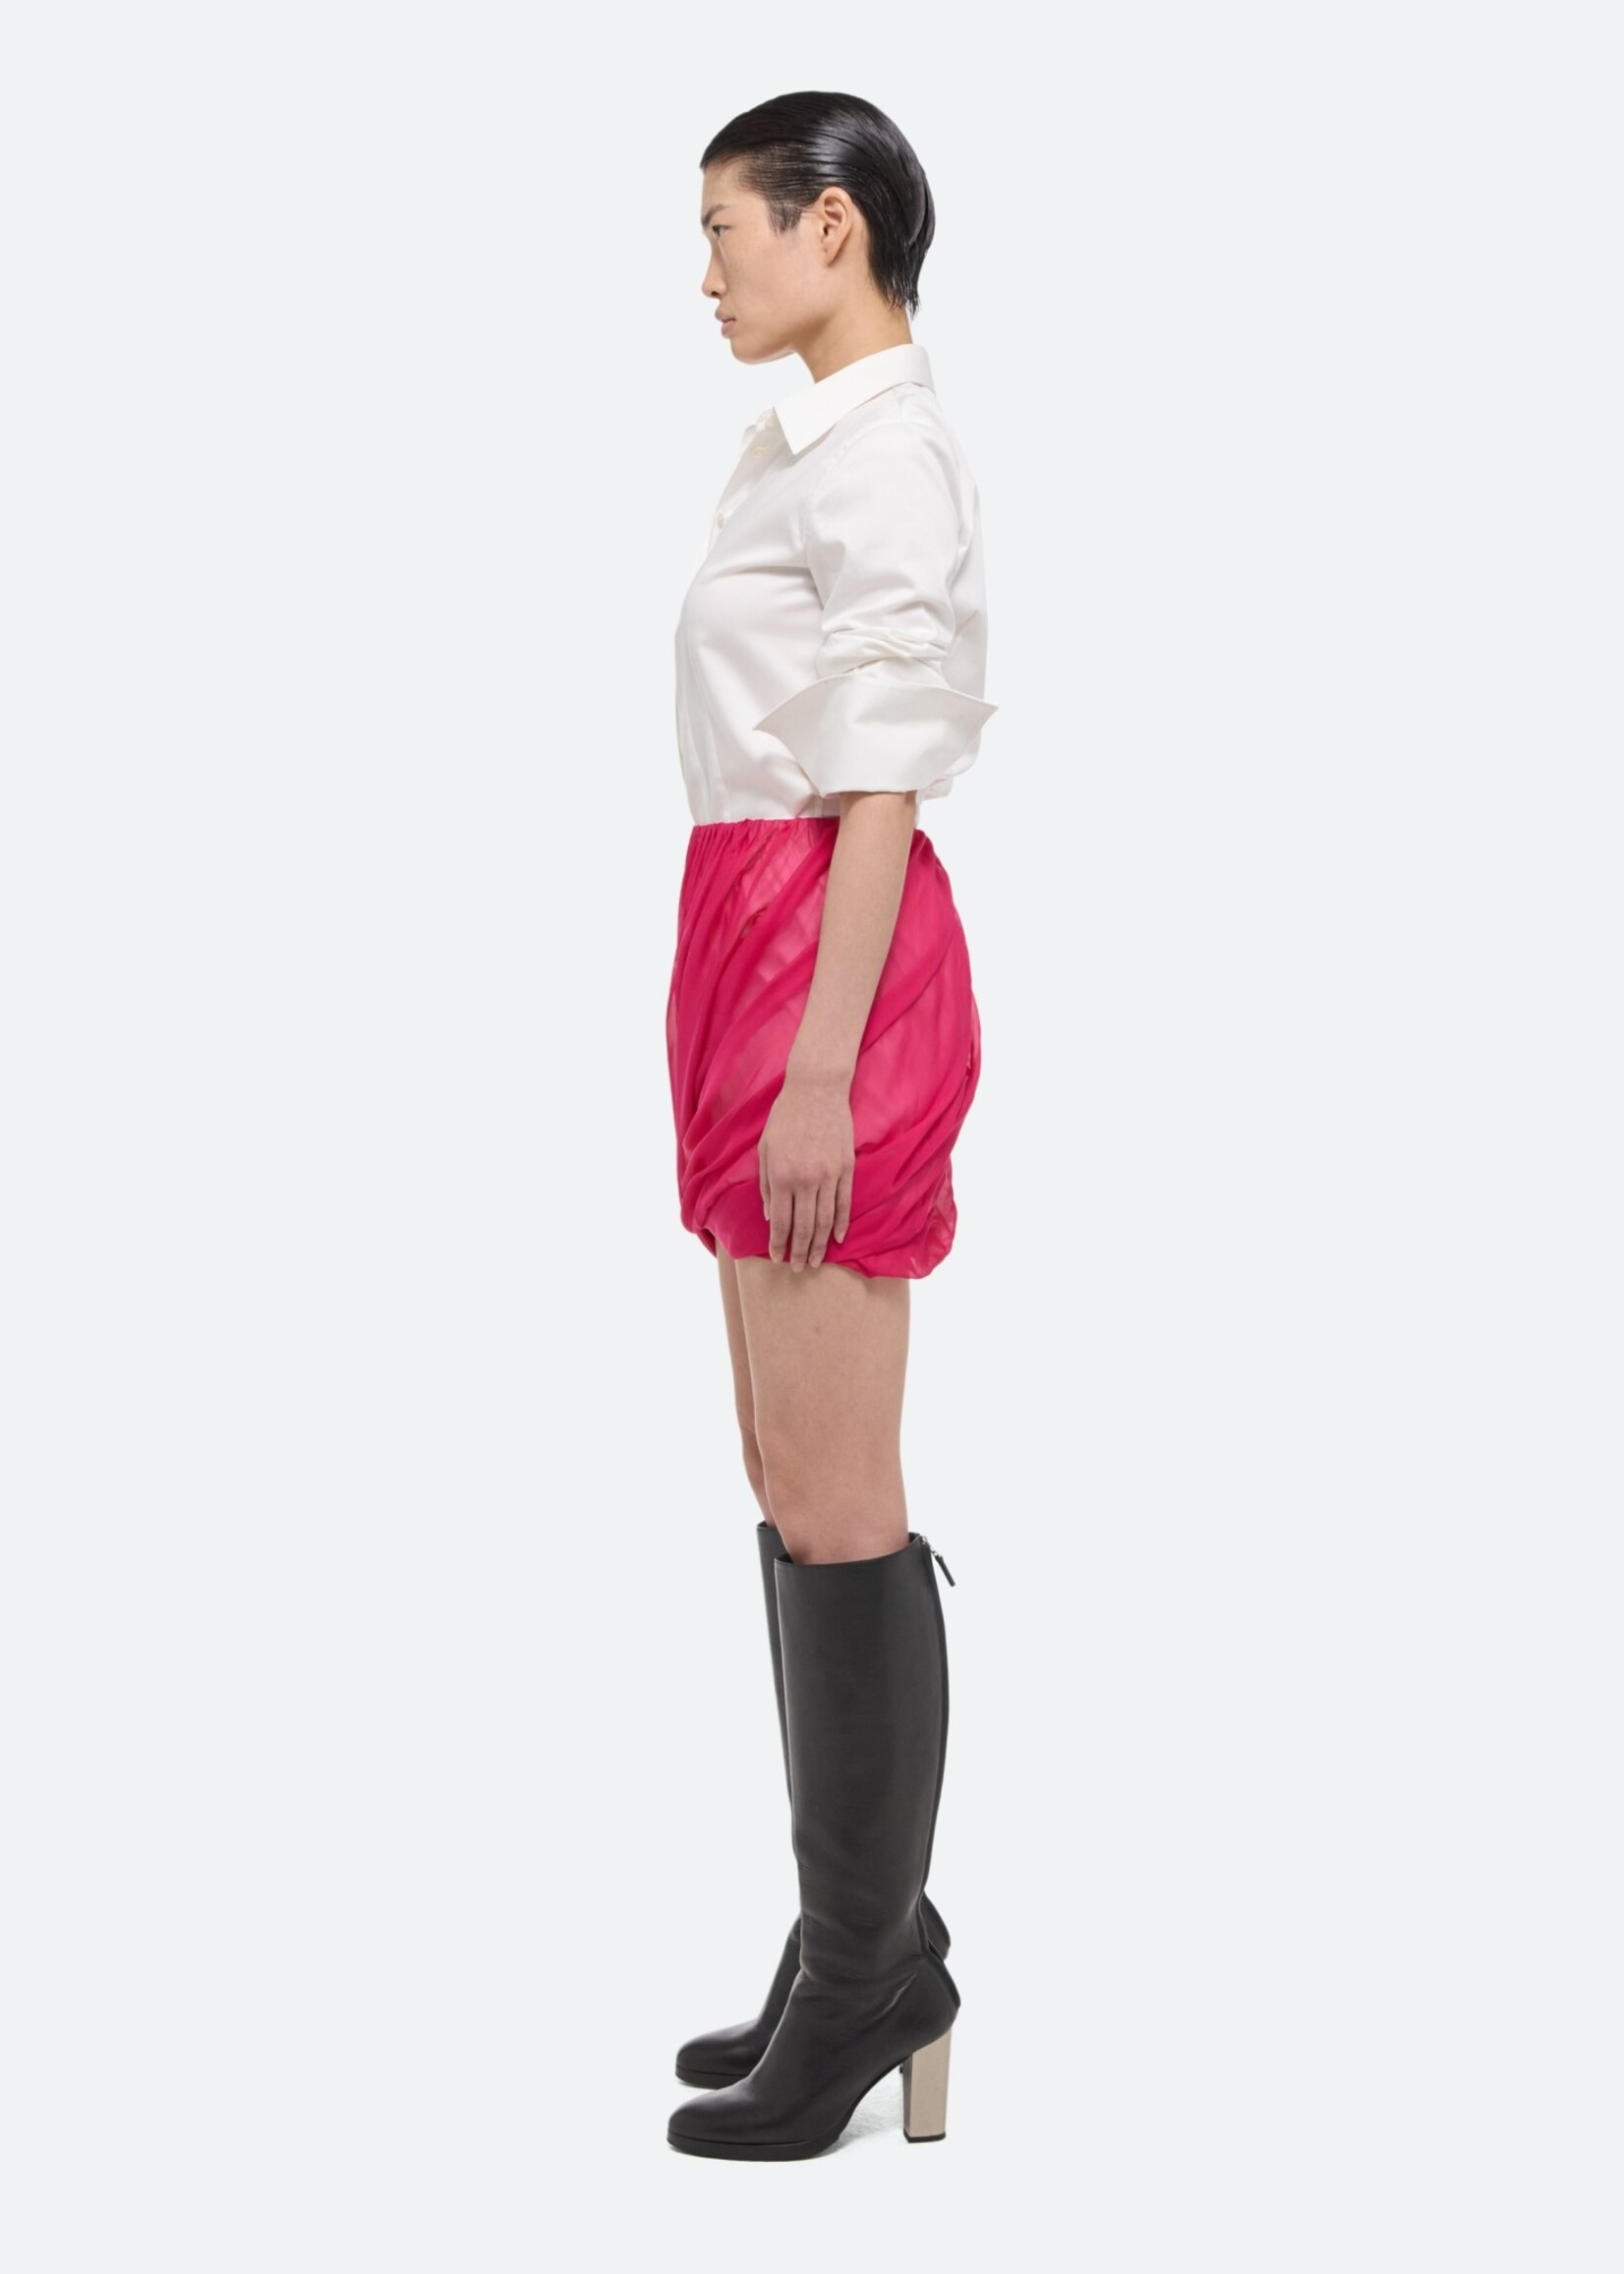 HELMUT LANG BY PETER DO Women's Silk Bubble Skirt in Fuchsia